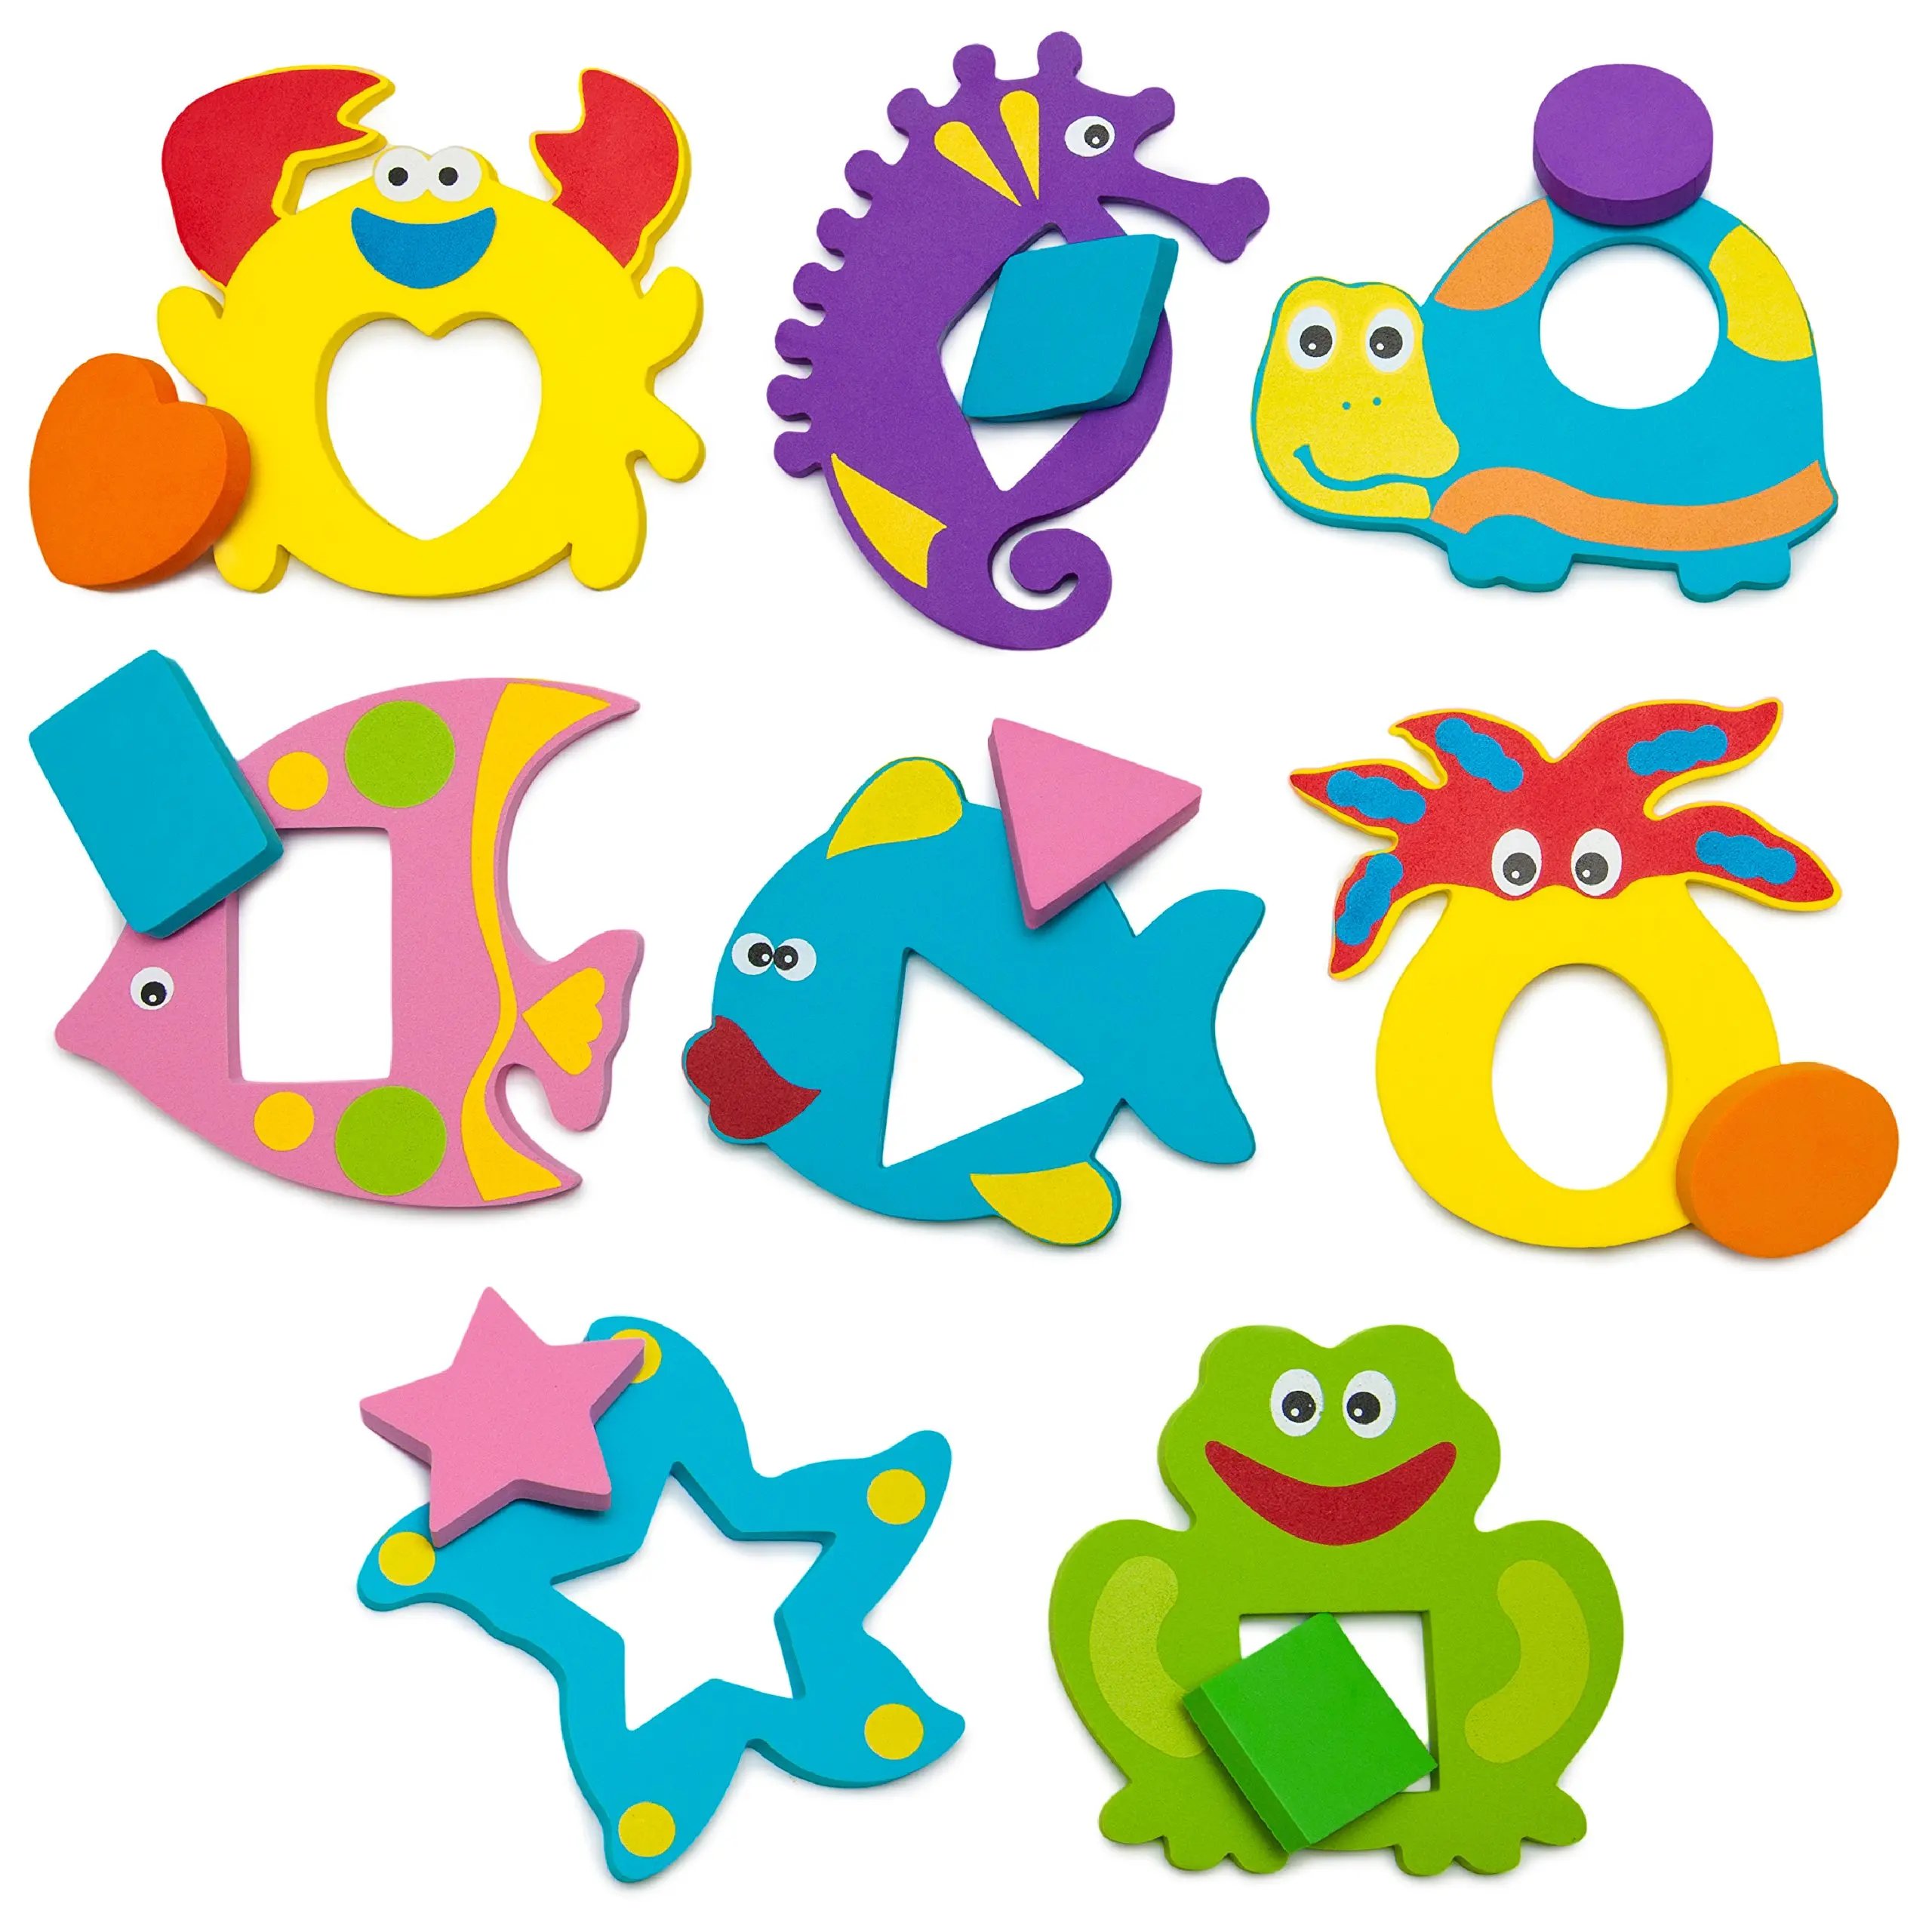 foam puzzles for preschoolers